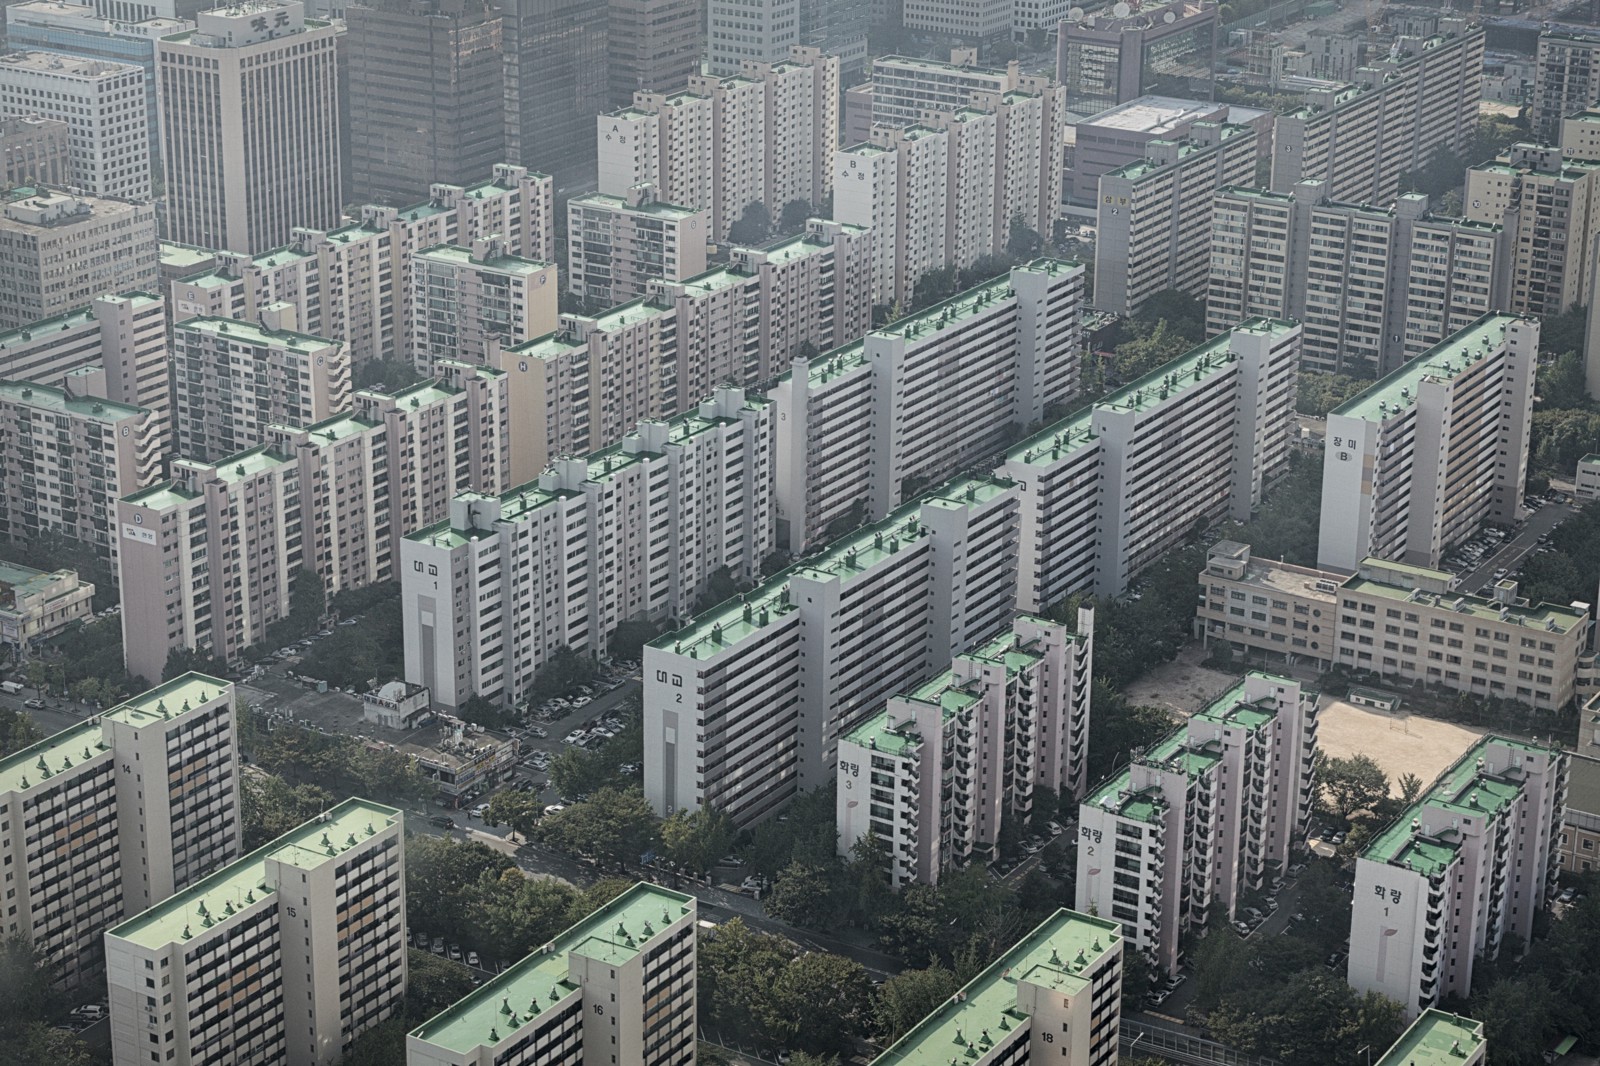 Apartment complex in Seoul, South Korea